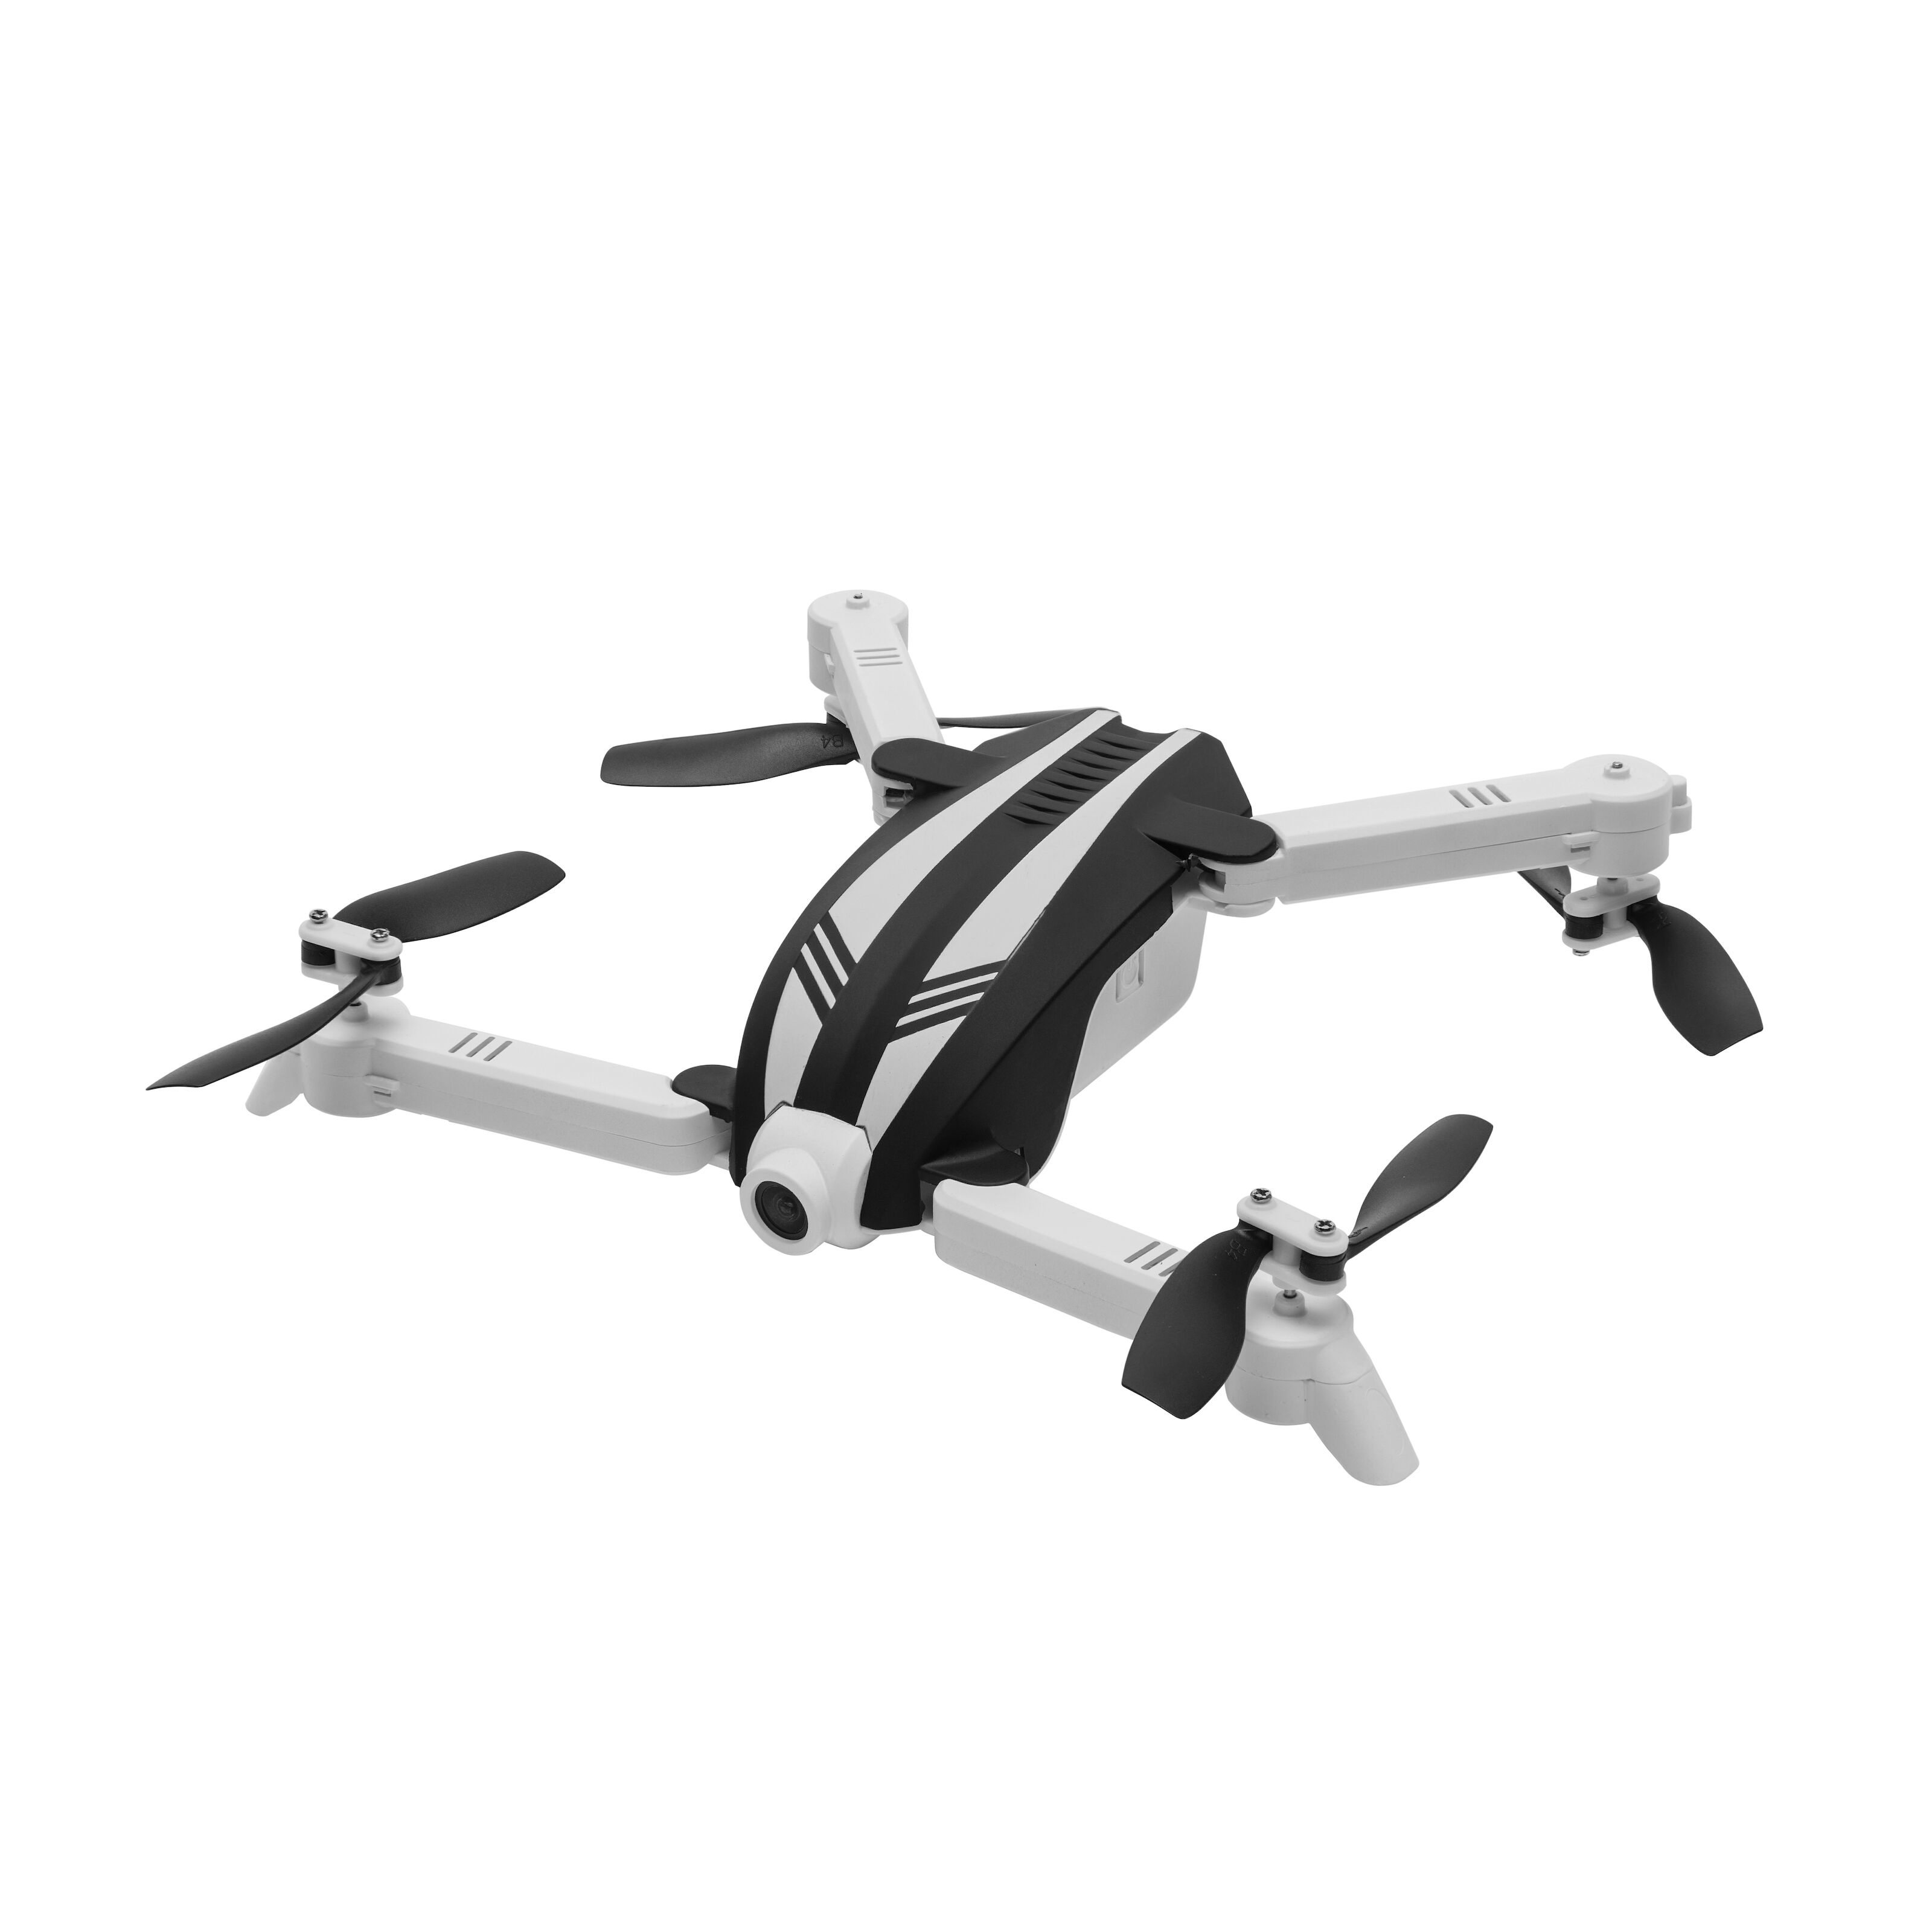 heron mini drone 2.4 ghz